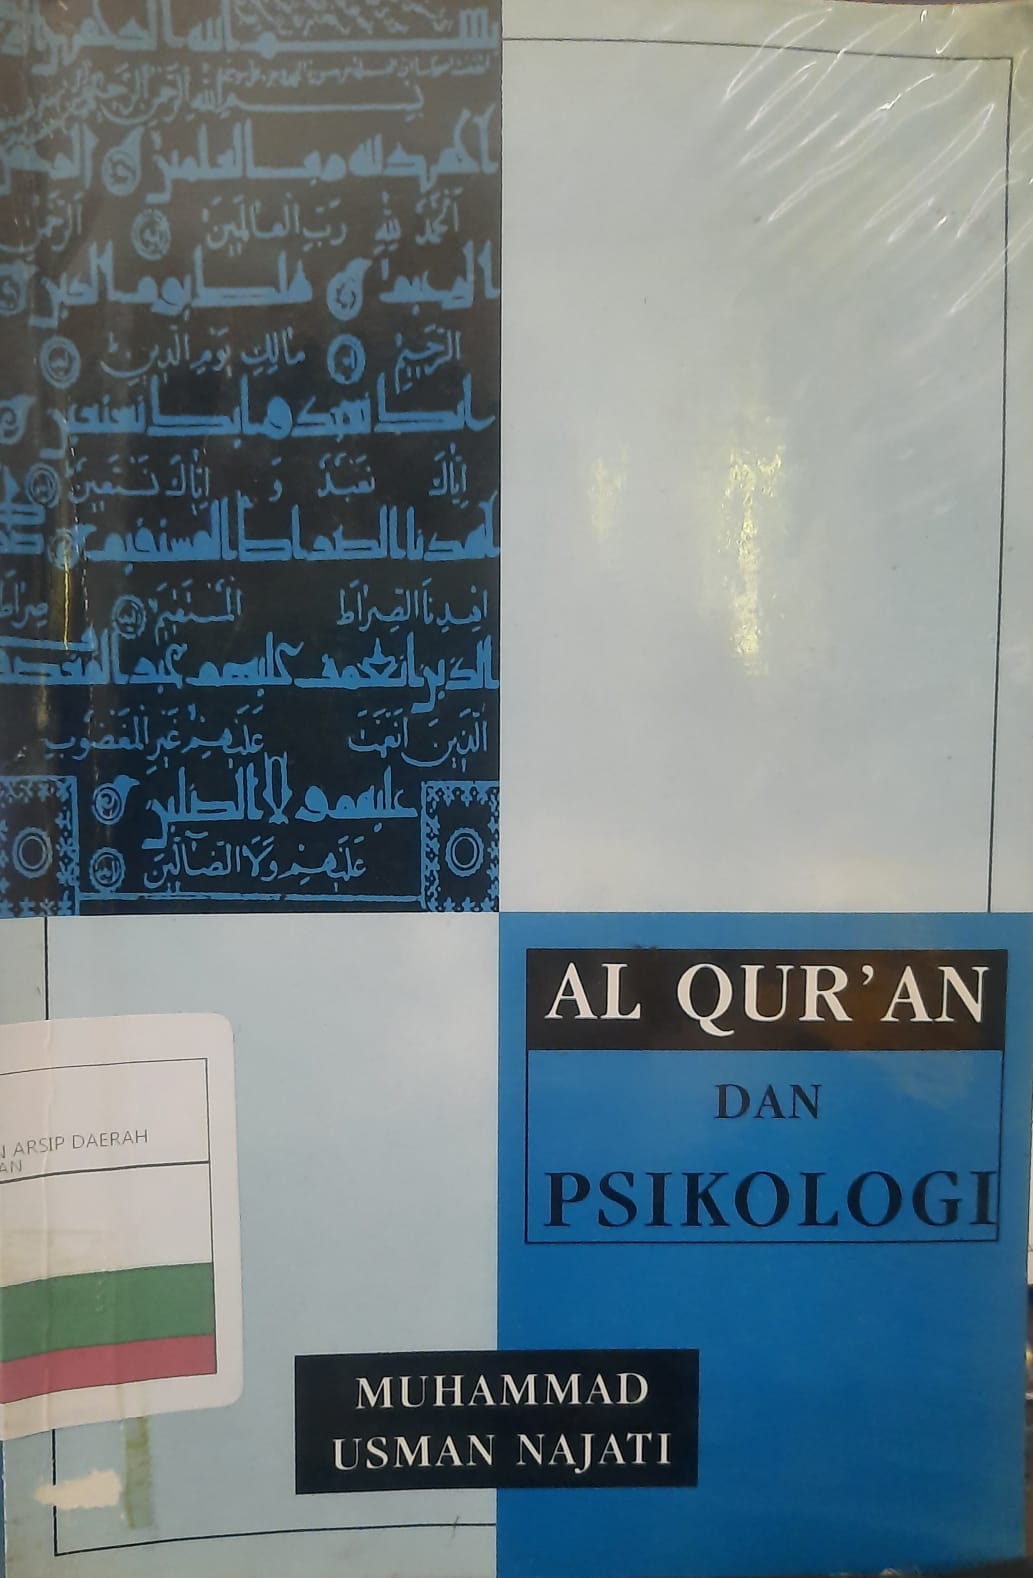 Al Qur'an dan psikologi